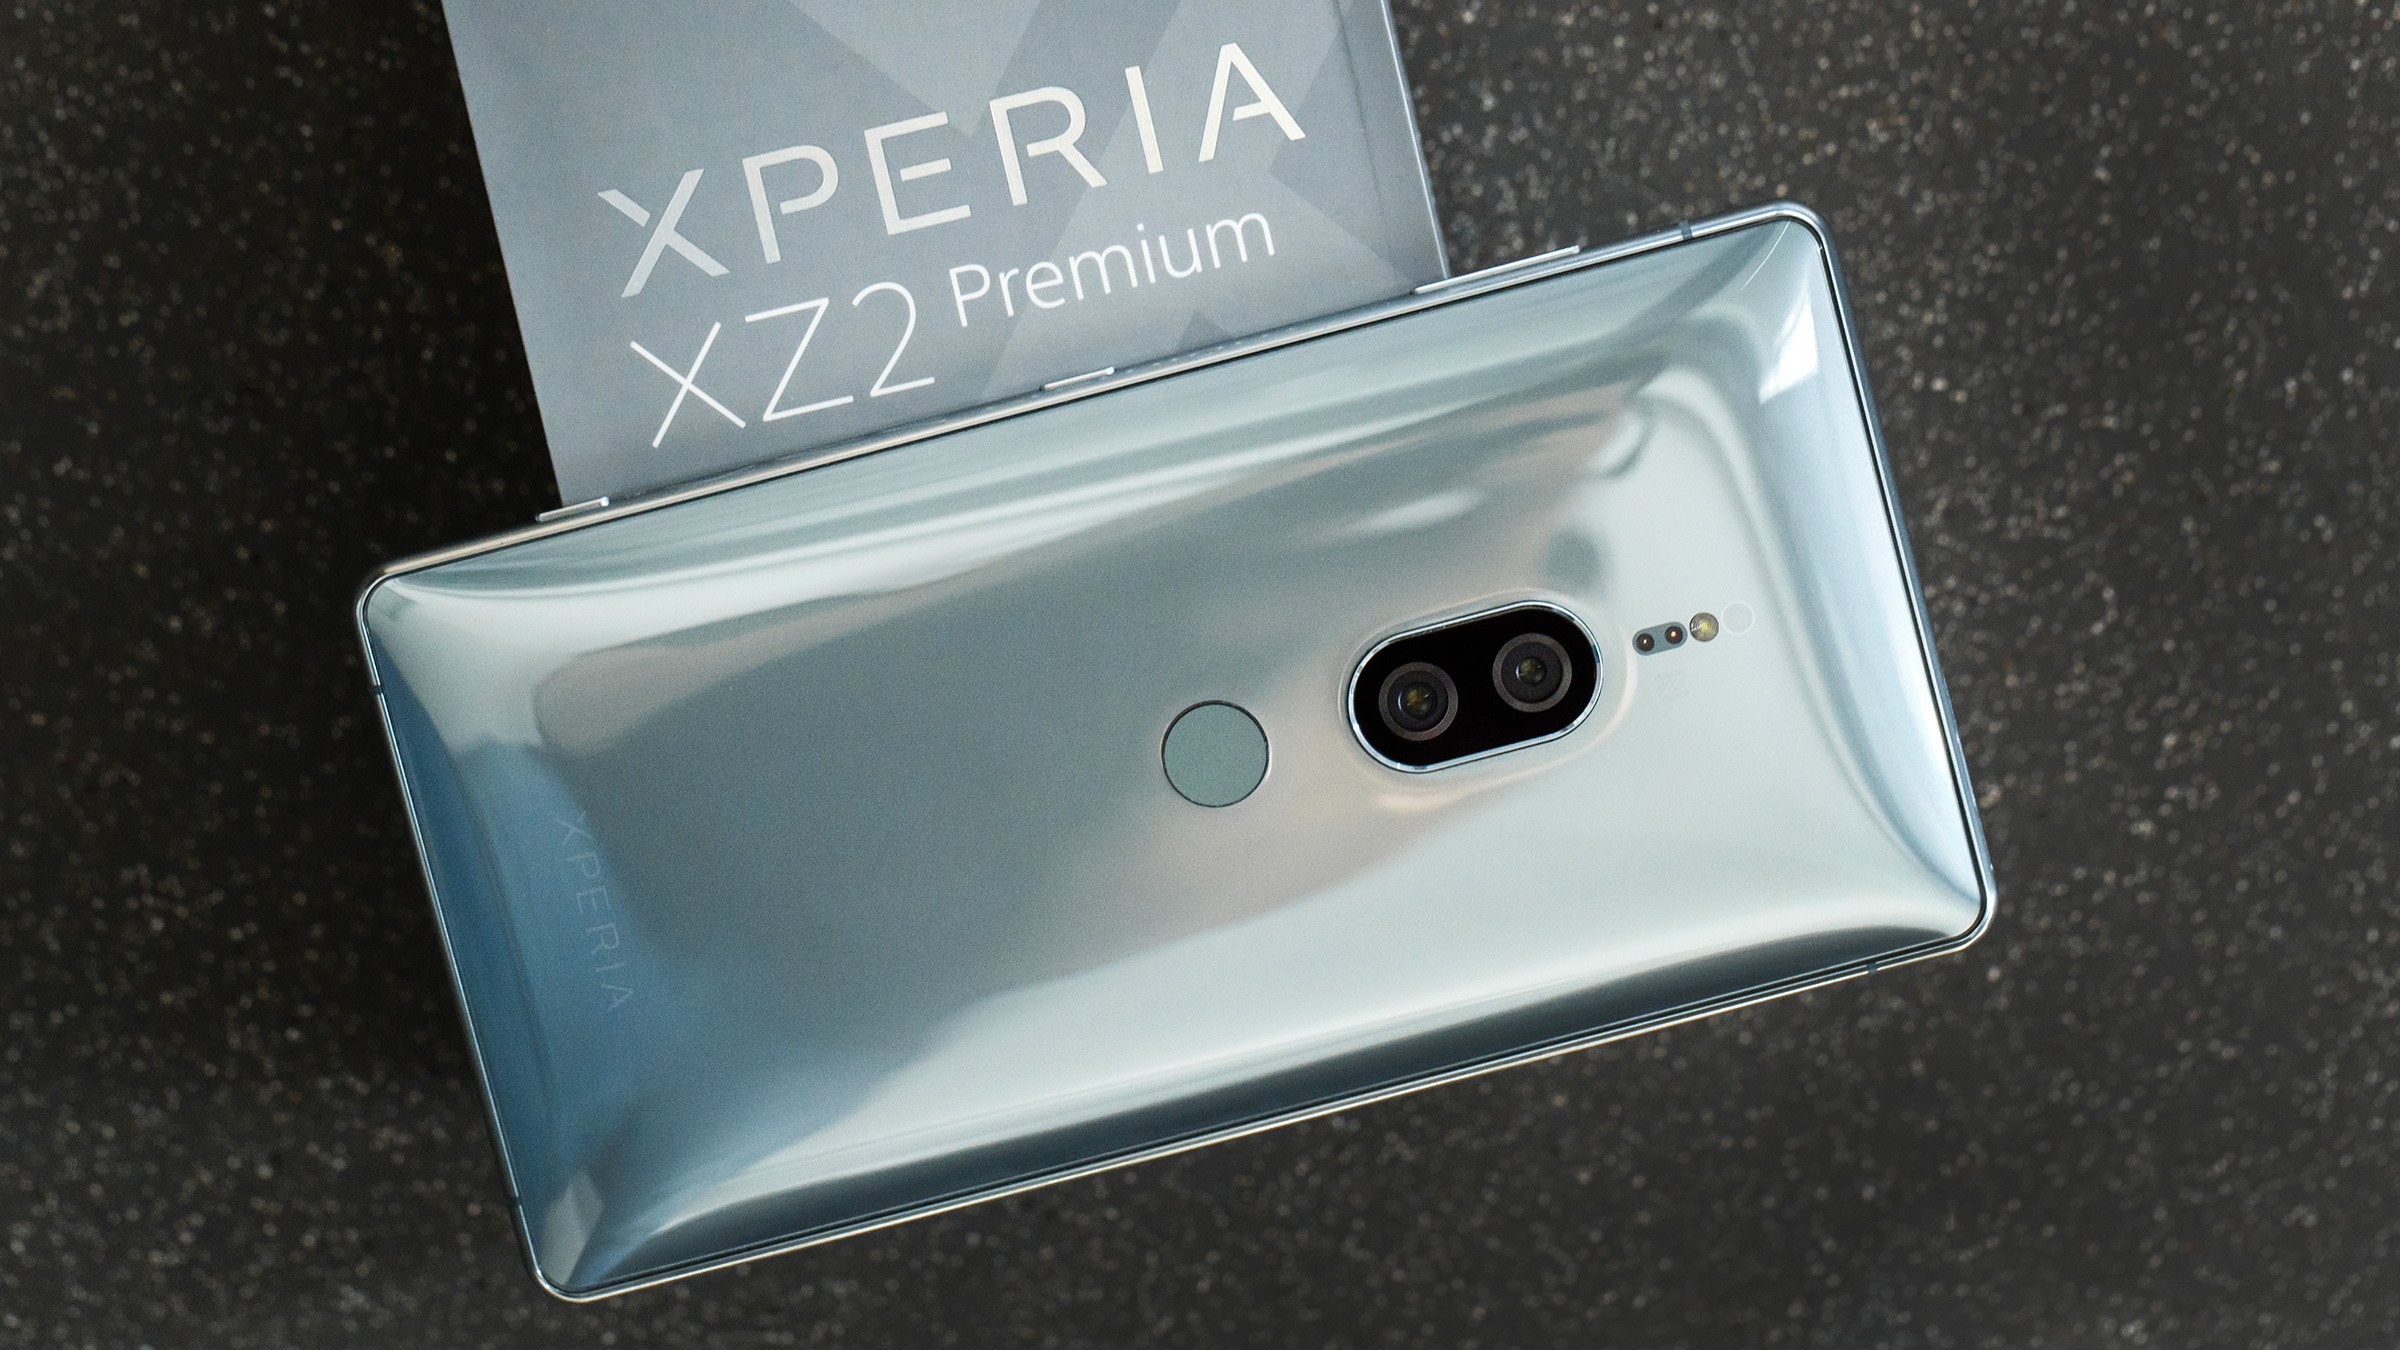 【B】Xperia XZ2 Premium/353651090212286